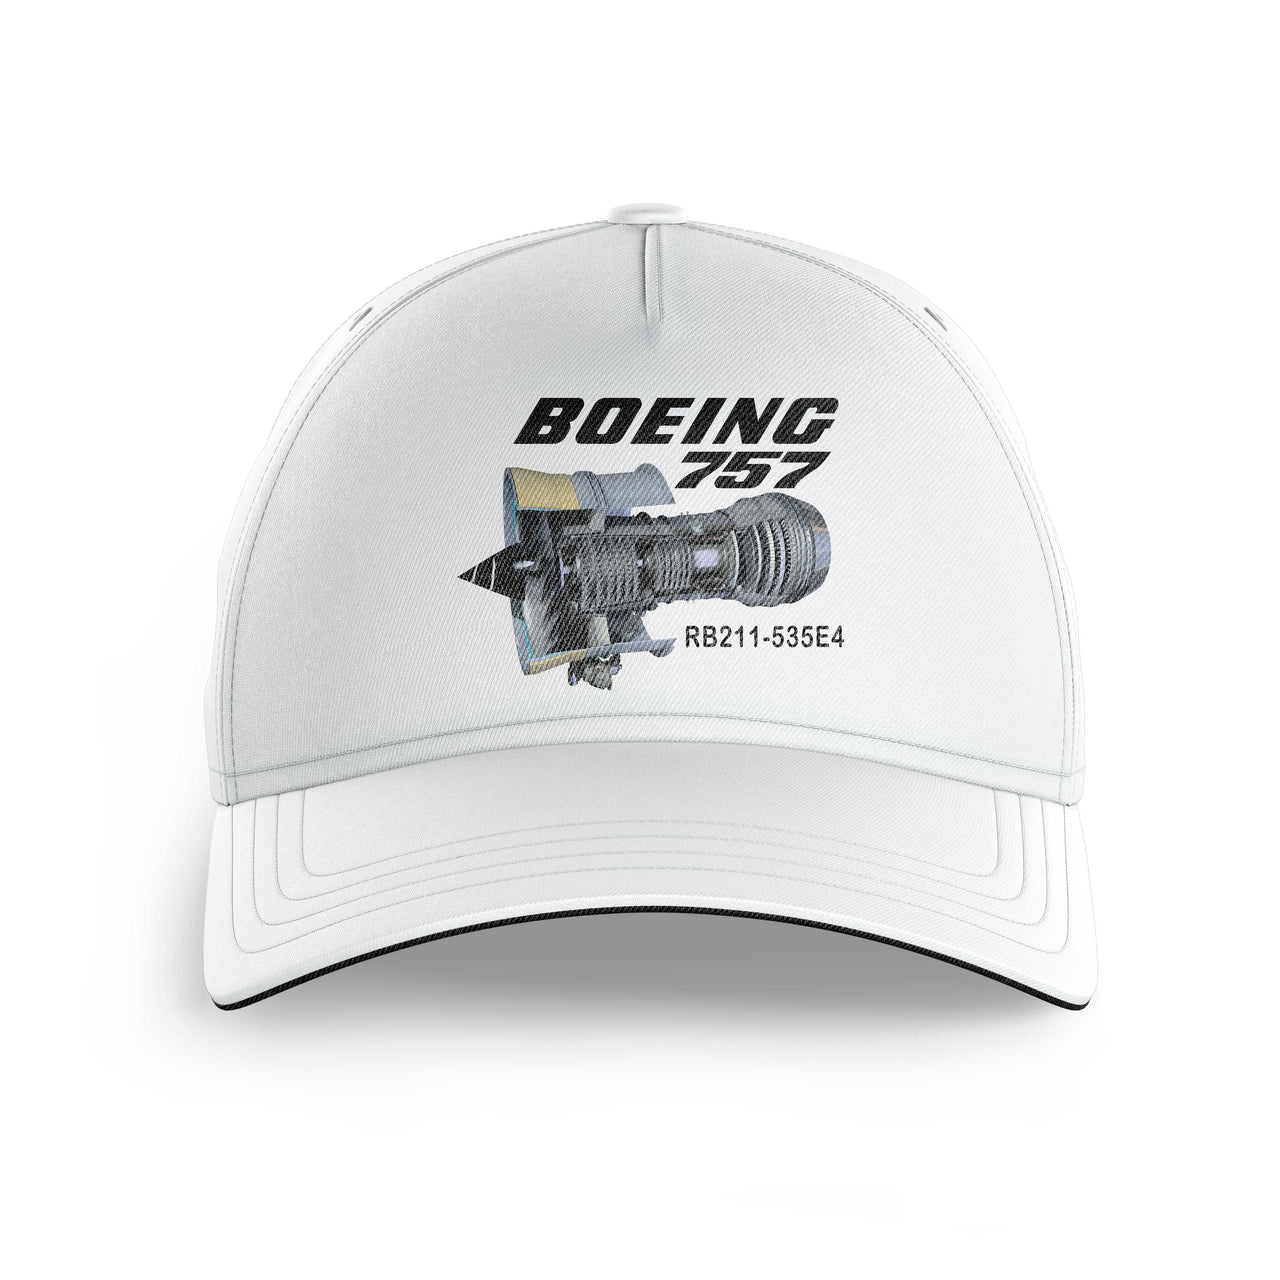 Boeing 757 & Rolls Royce Engine (RB211) Printed Hats